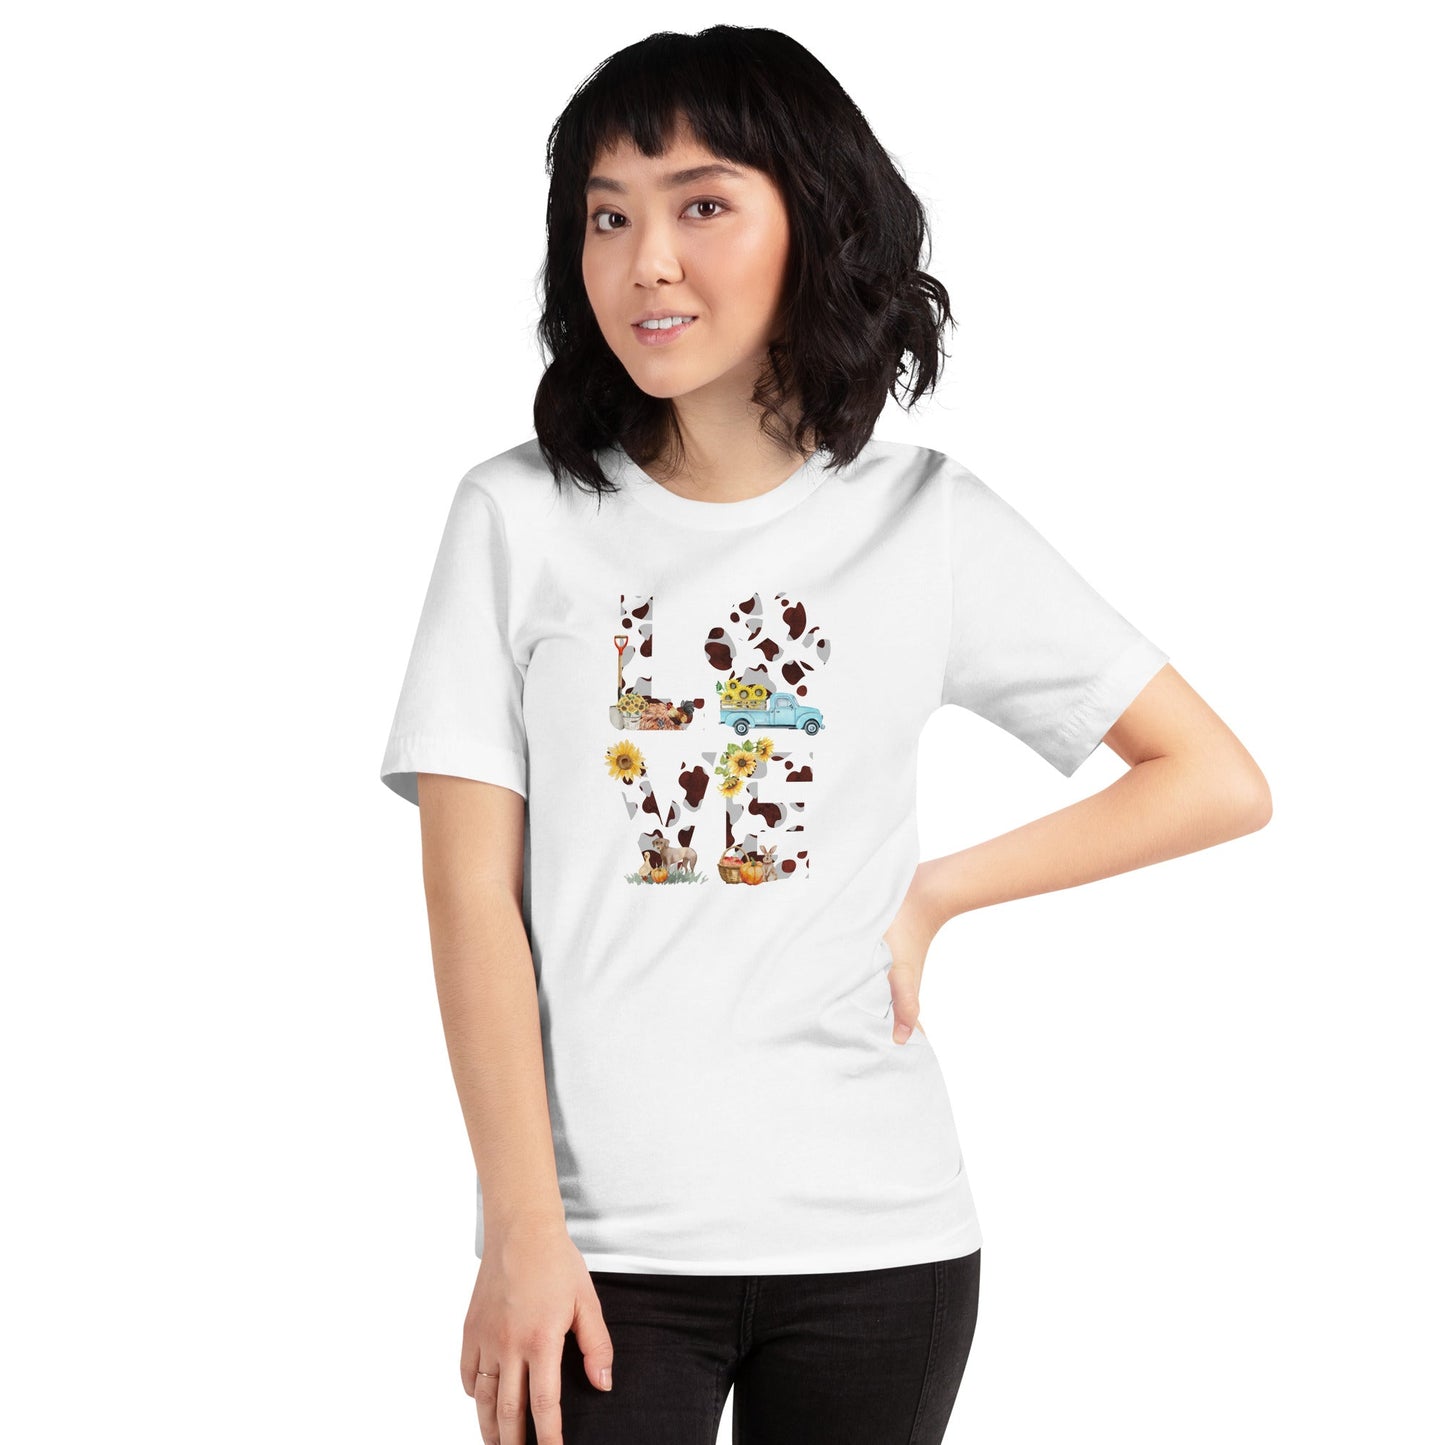 Dog Mom Farm Love T-Shirt - DoggyLoveandMore